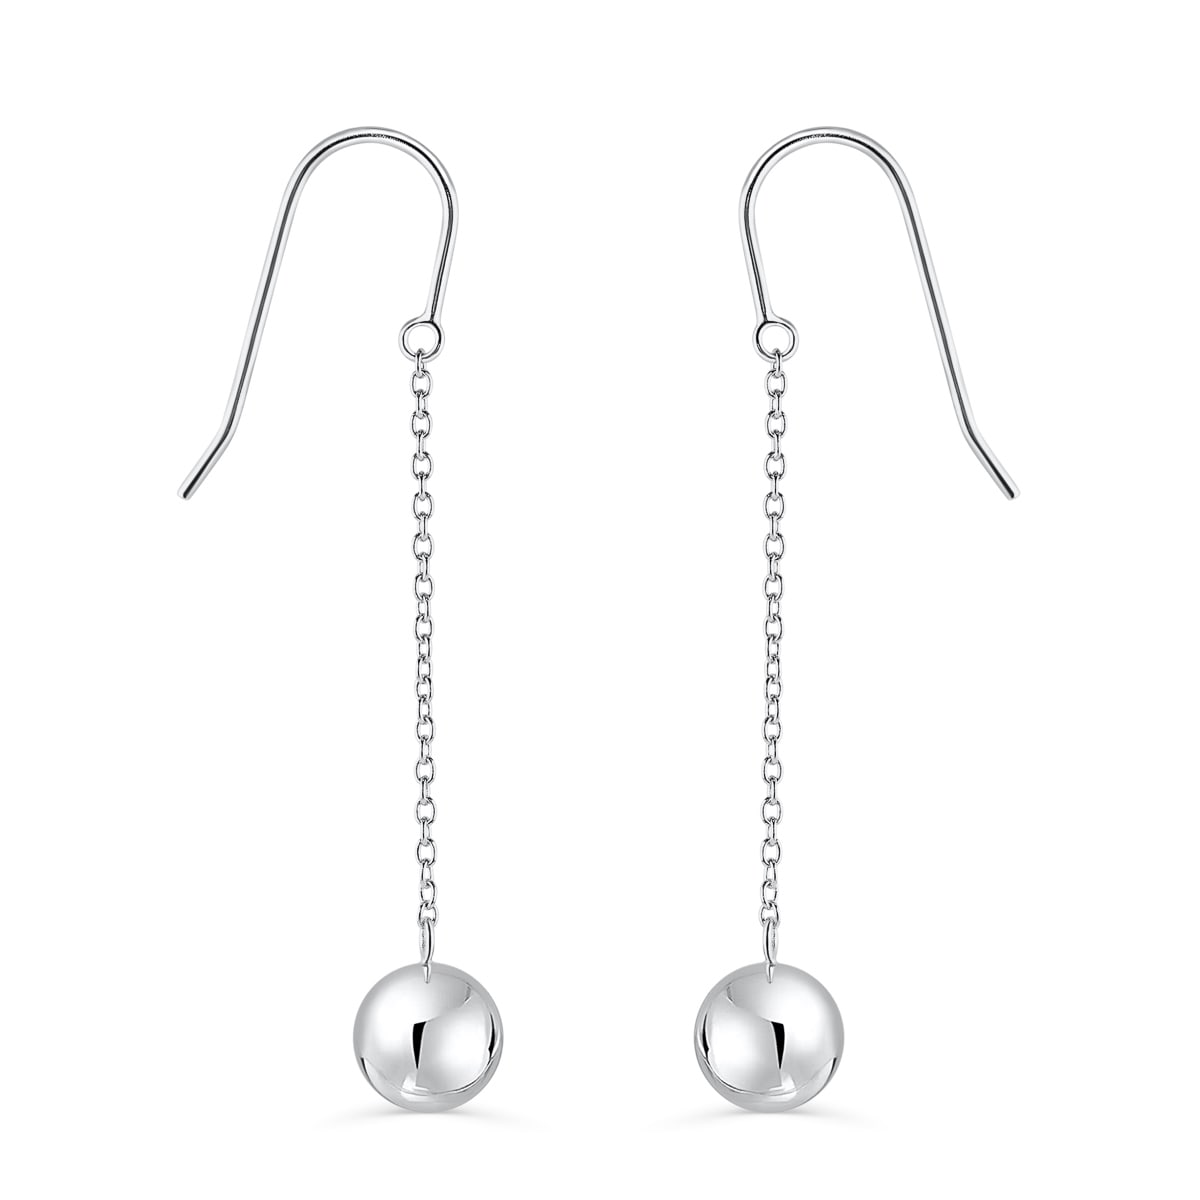 the alicia 925 silver earrings